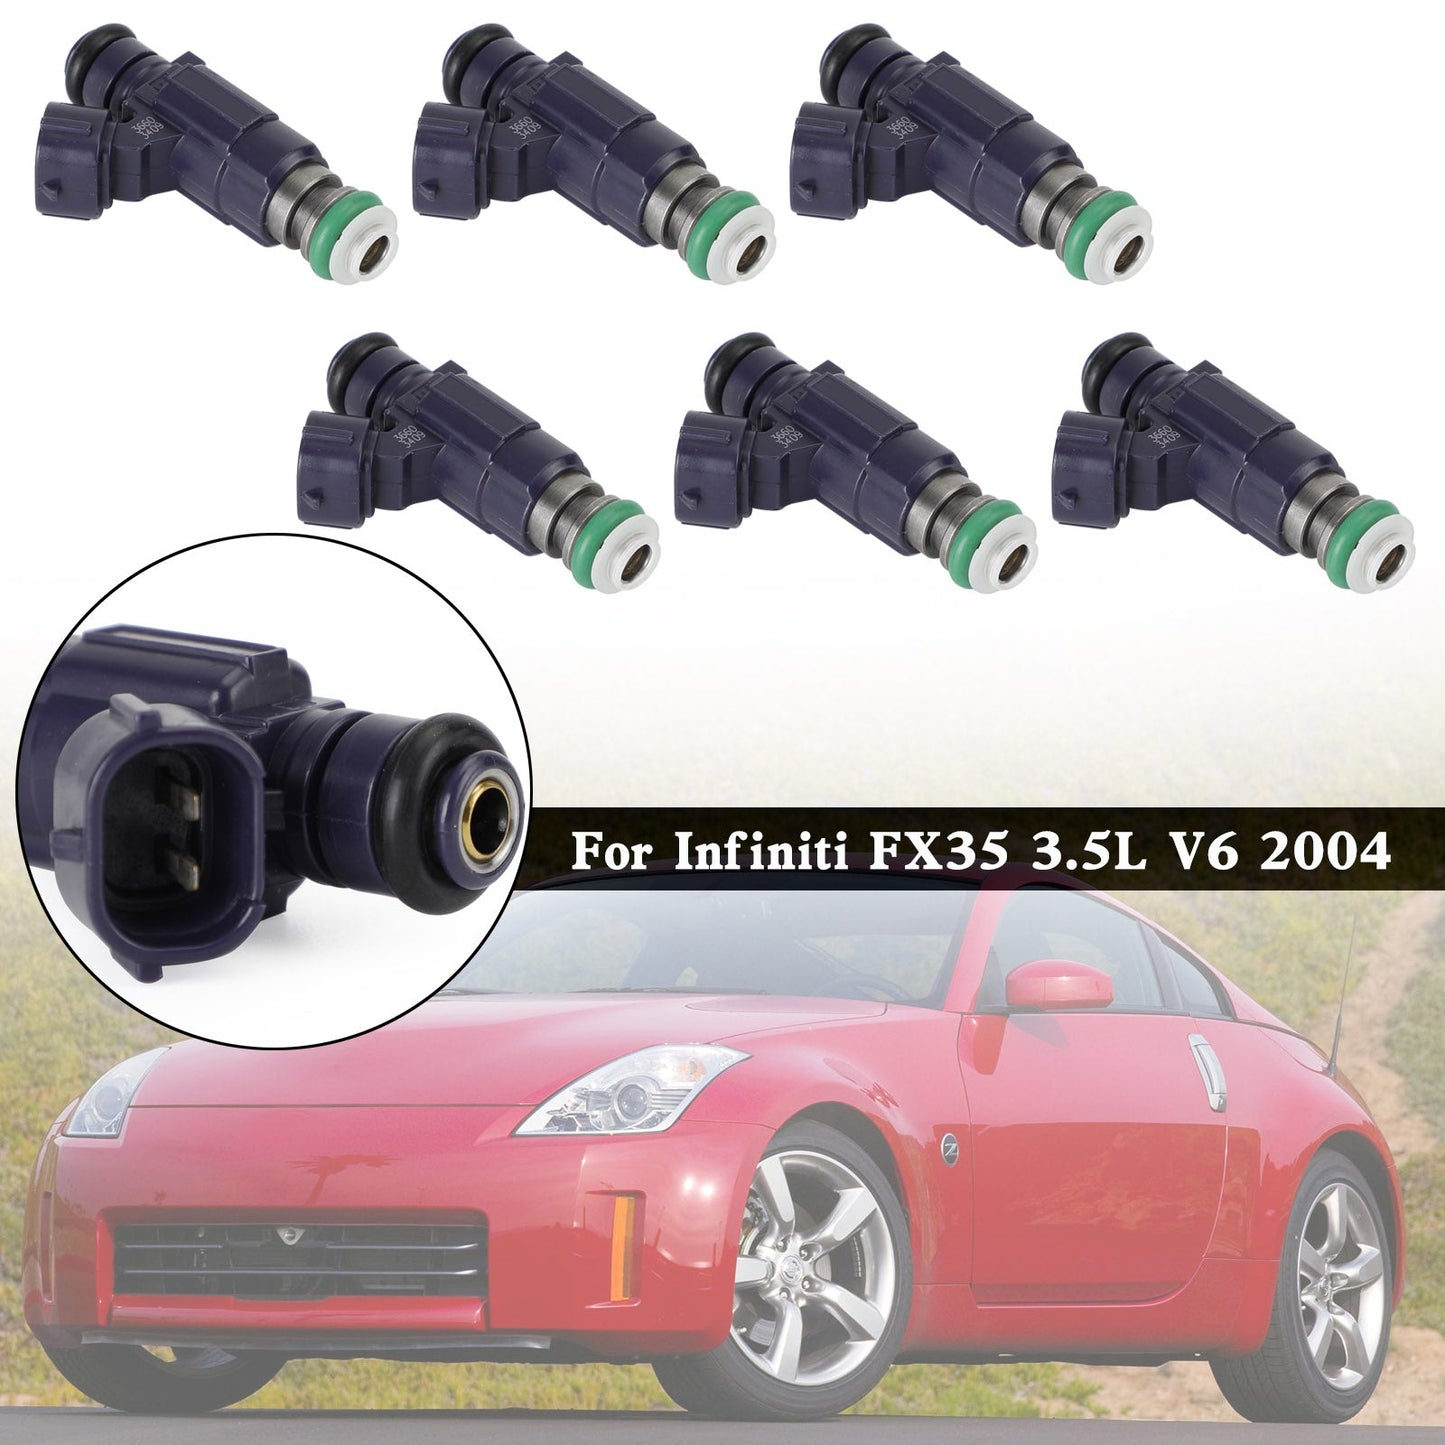 6PCS Fuel Injectors FBJC100 Fit Nissan 350Z 2003-04 Fit Infiniti G35 2003-2004